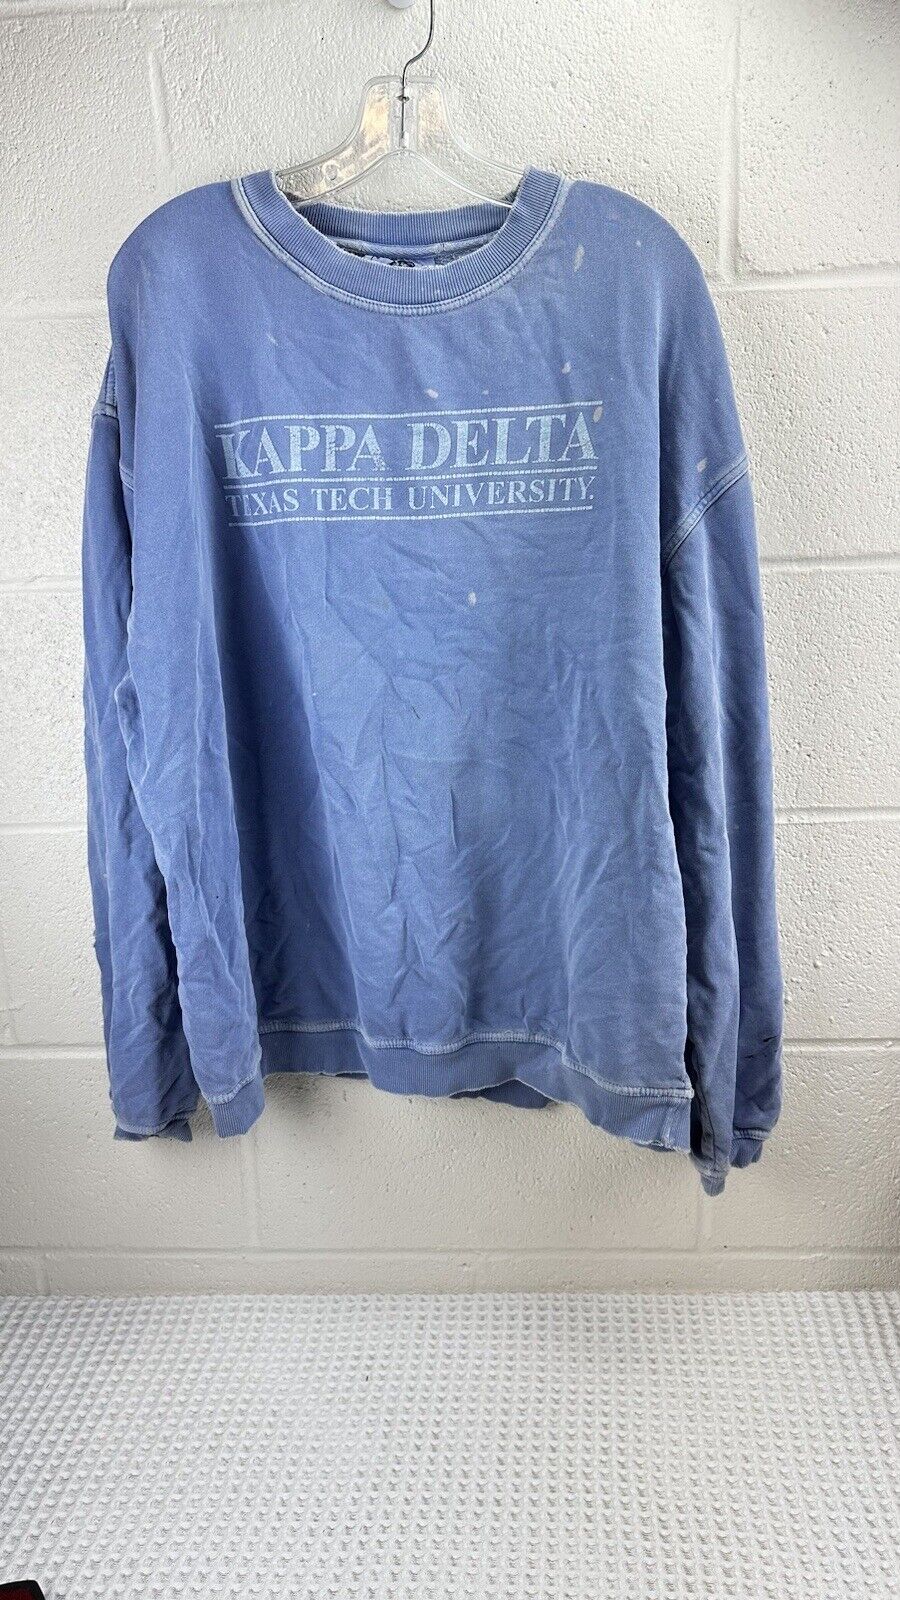 kappa delta texas tech sweatshirt Distressed Size XL, Light Blue